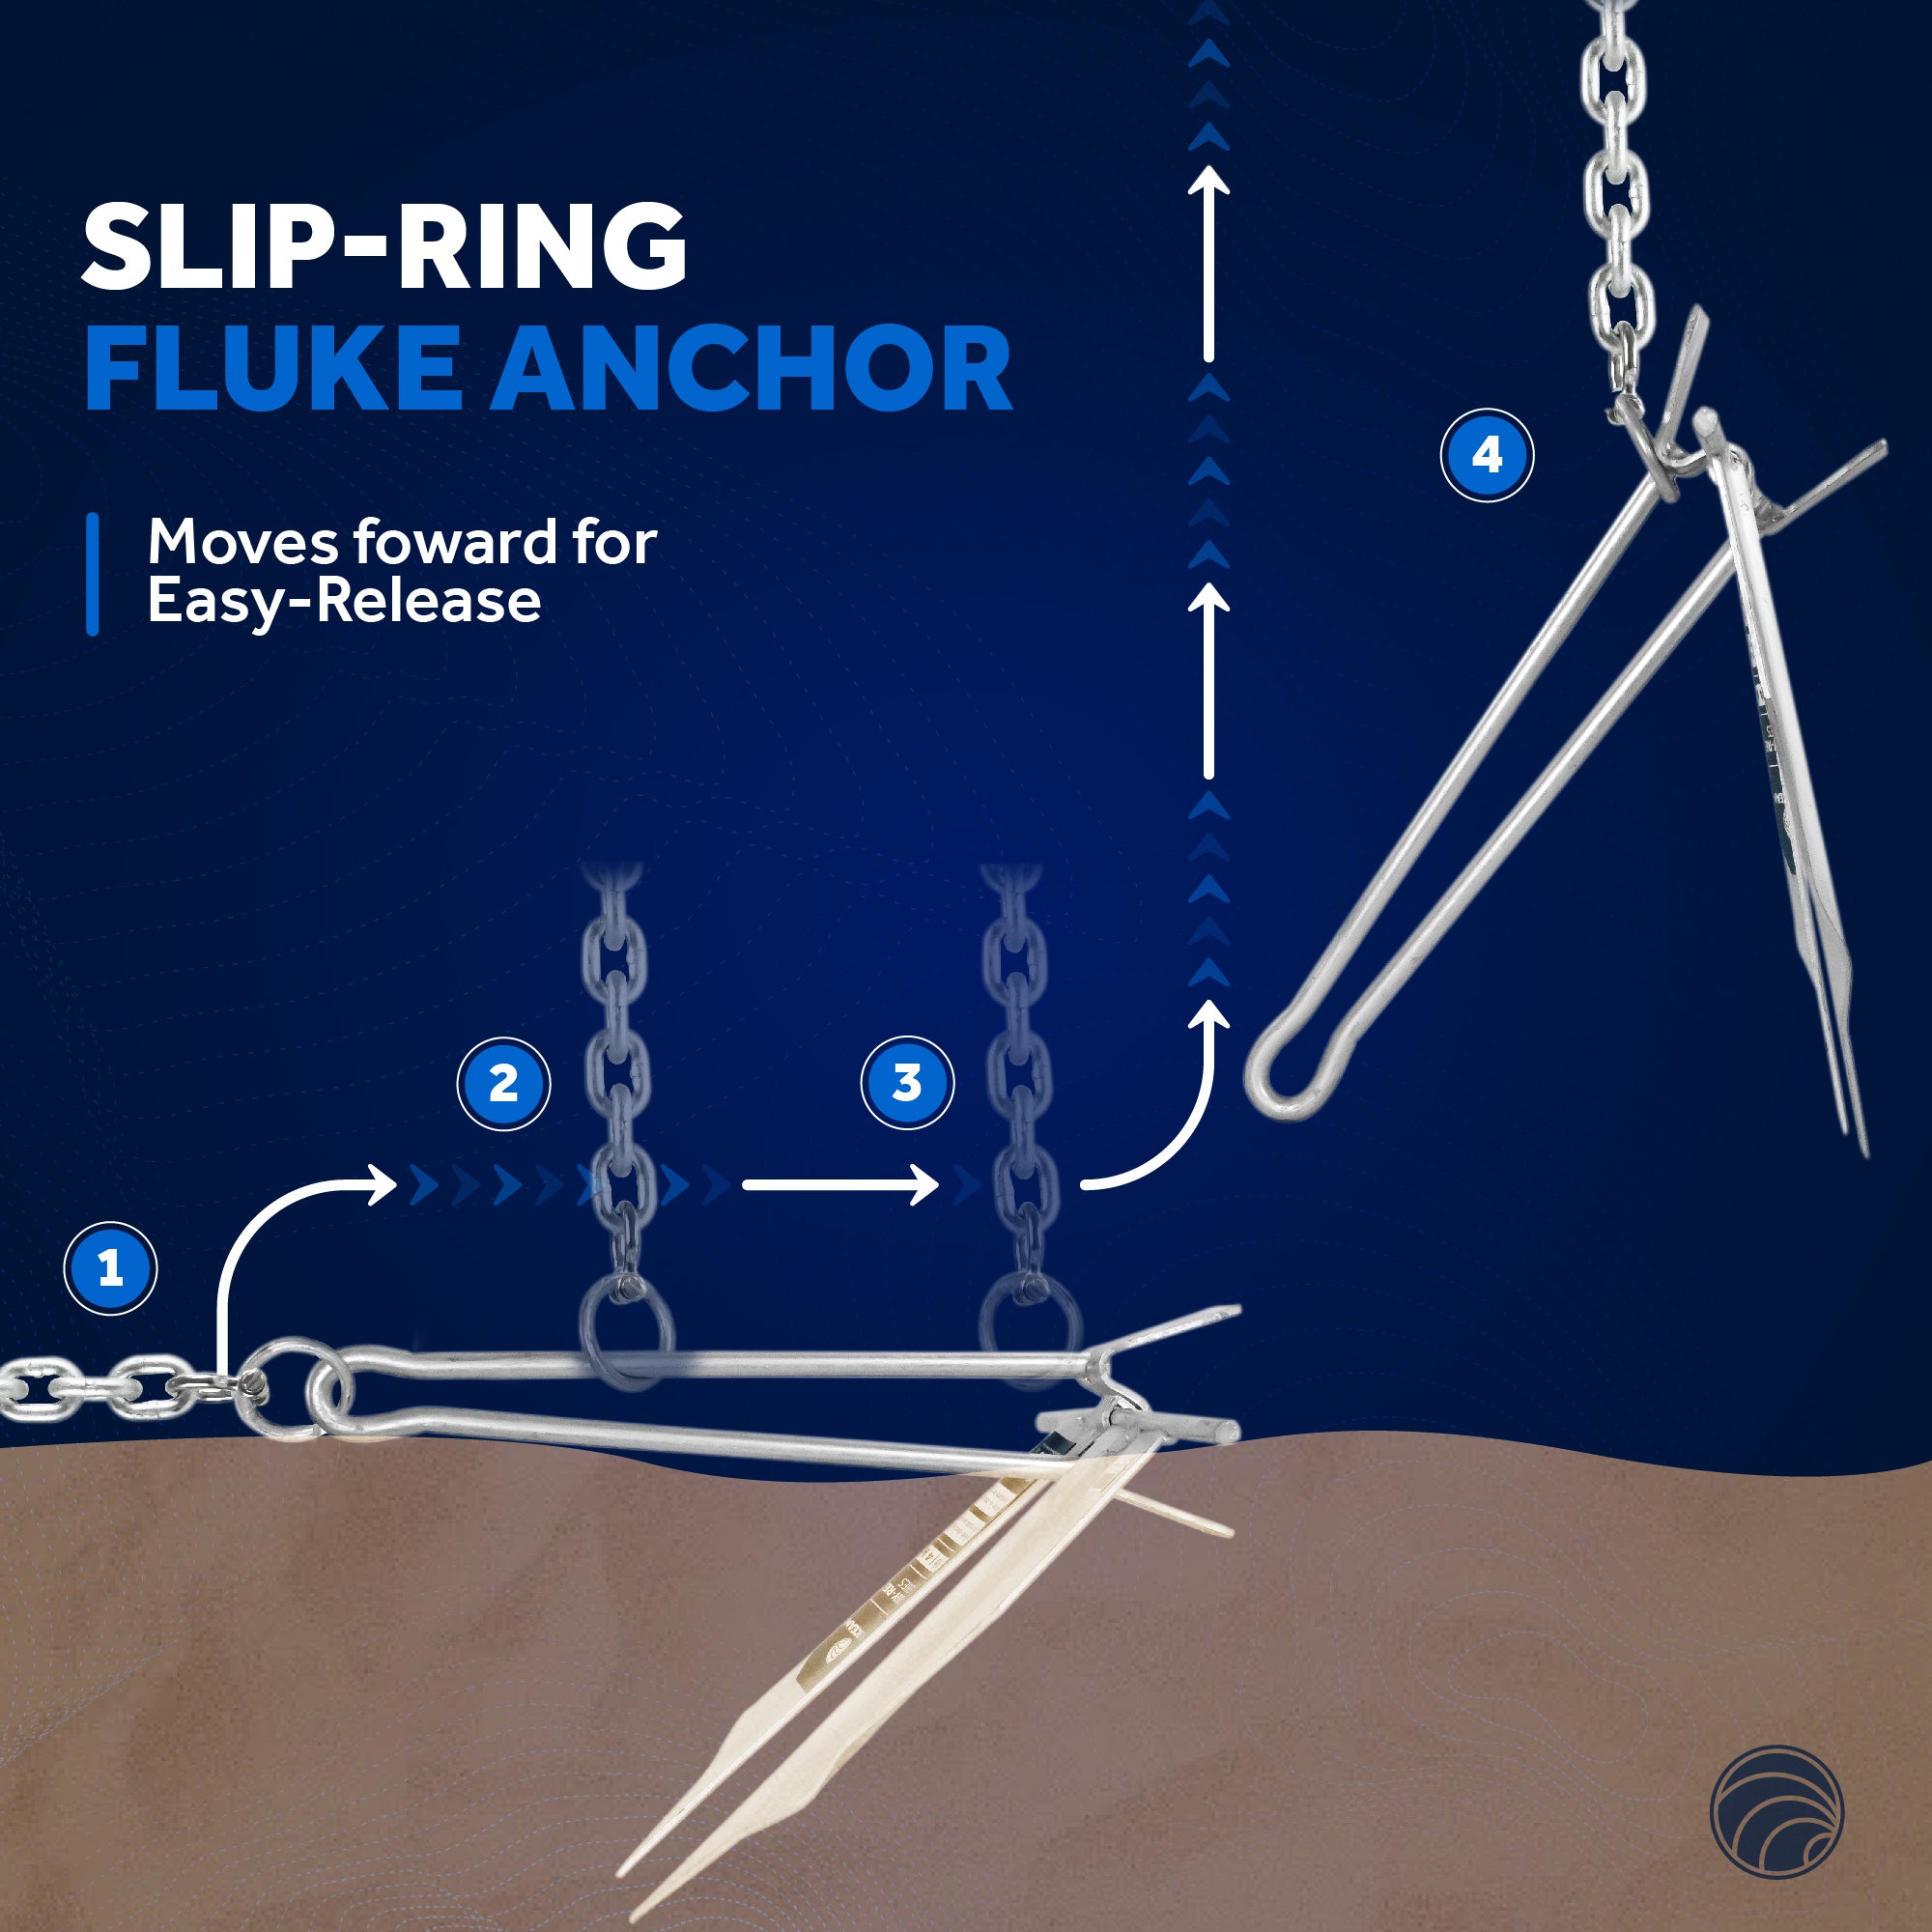 Five Oceans Boat Anchor - Fluke Anchor, 4 lb, Galvanized Steel Slip Ring Boat Anchor, Boat Anchors, Small Boat Anchor for Kayak, Dinghies Personal